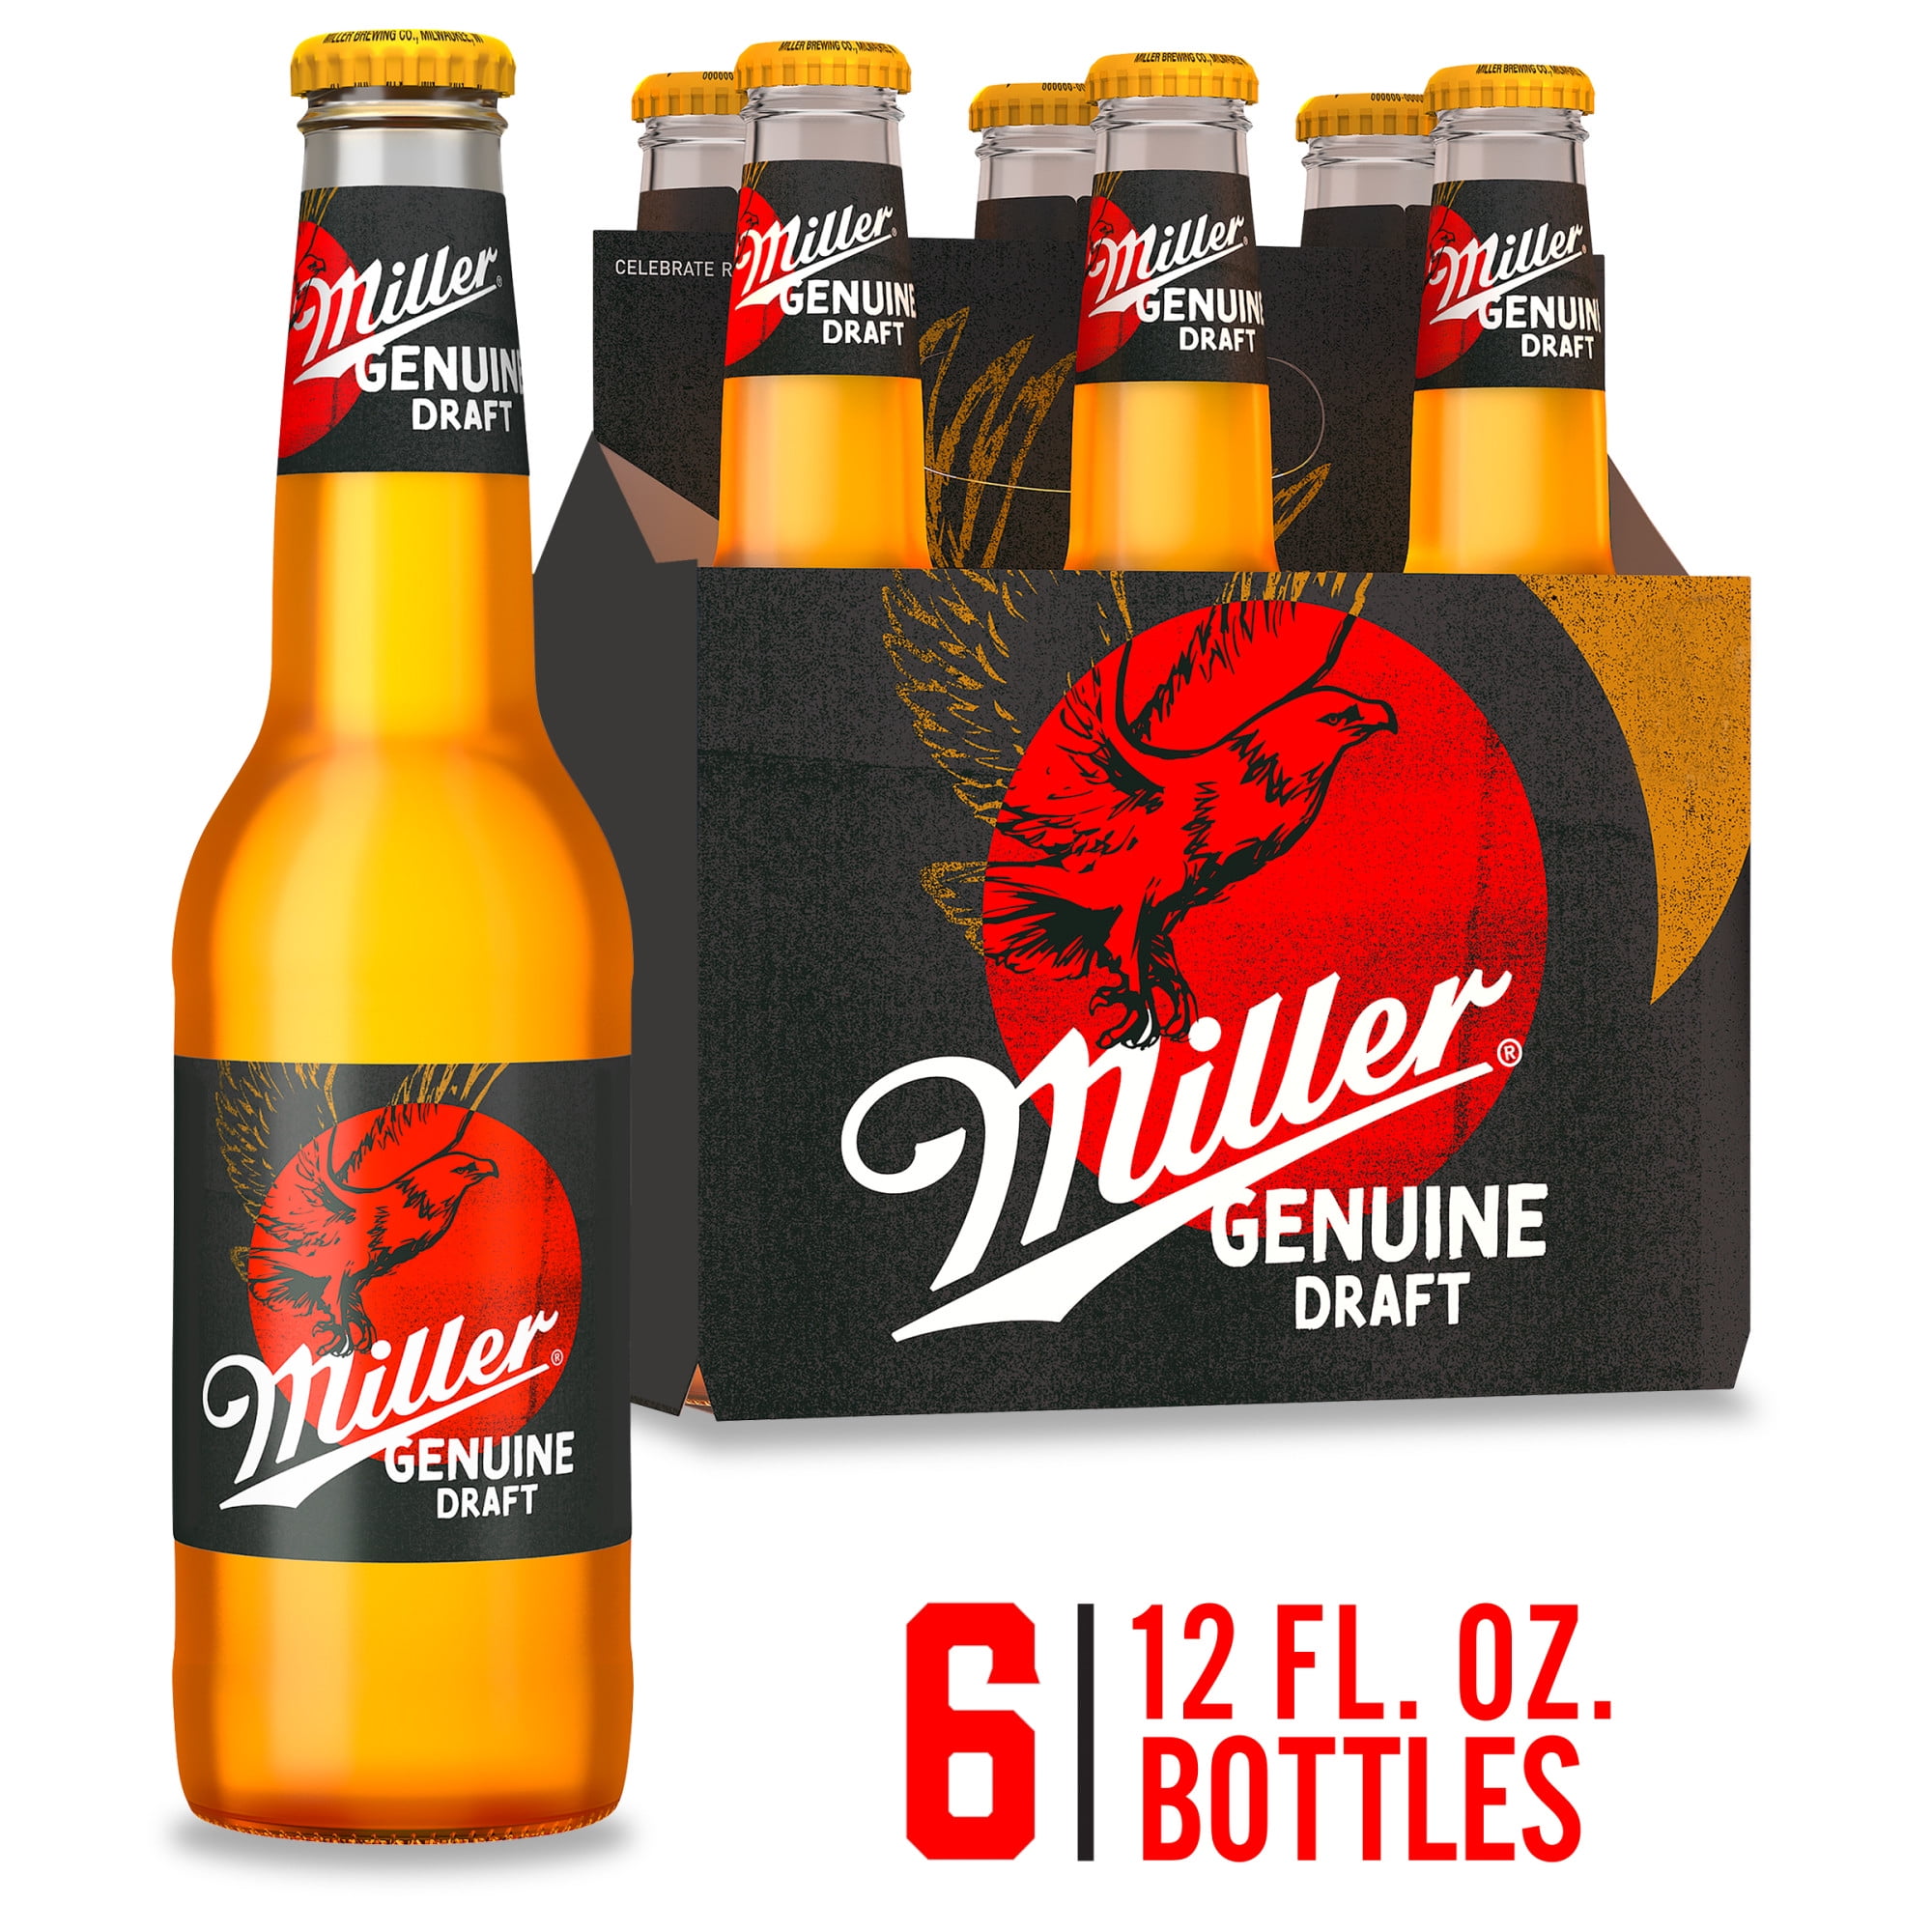 NEW Miller genuine draft beer Valance Curtain Window Topper 